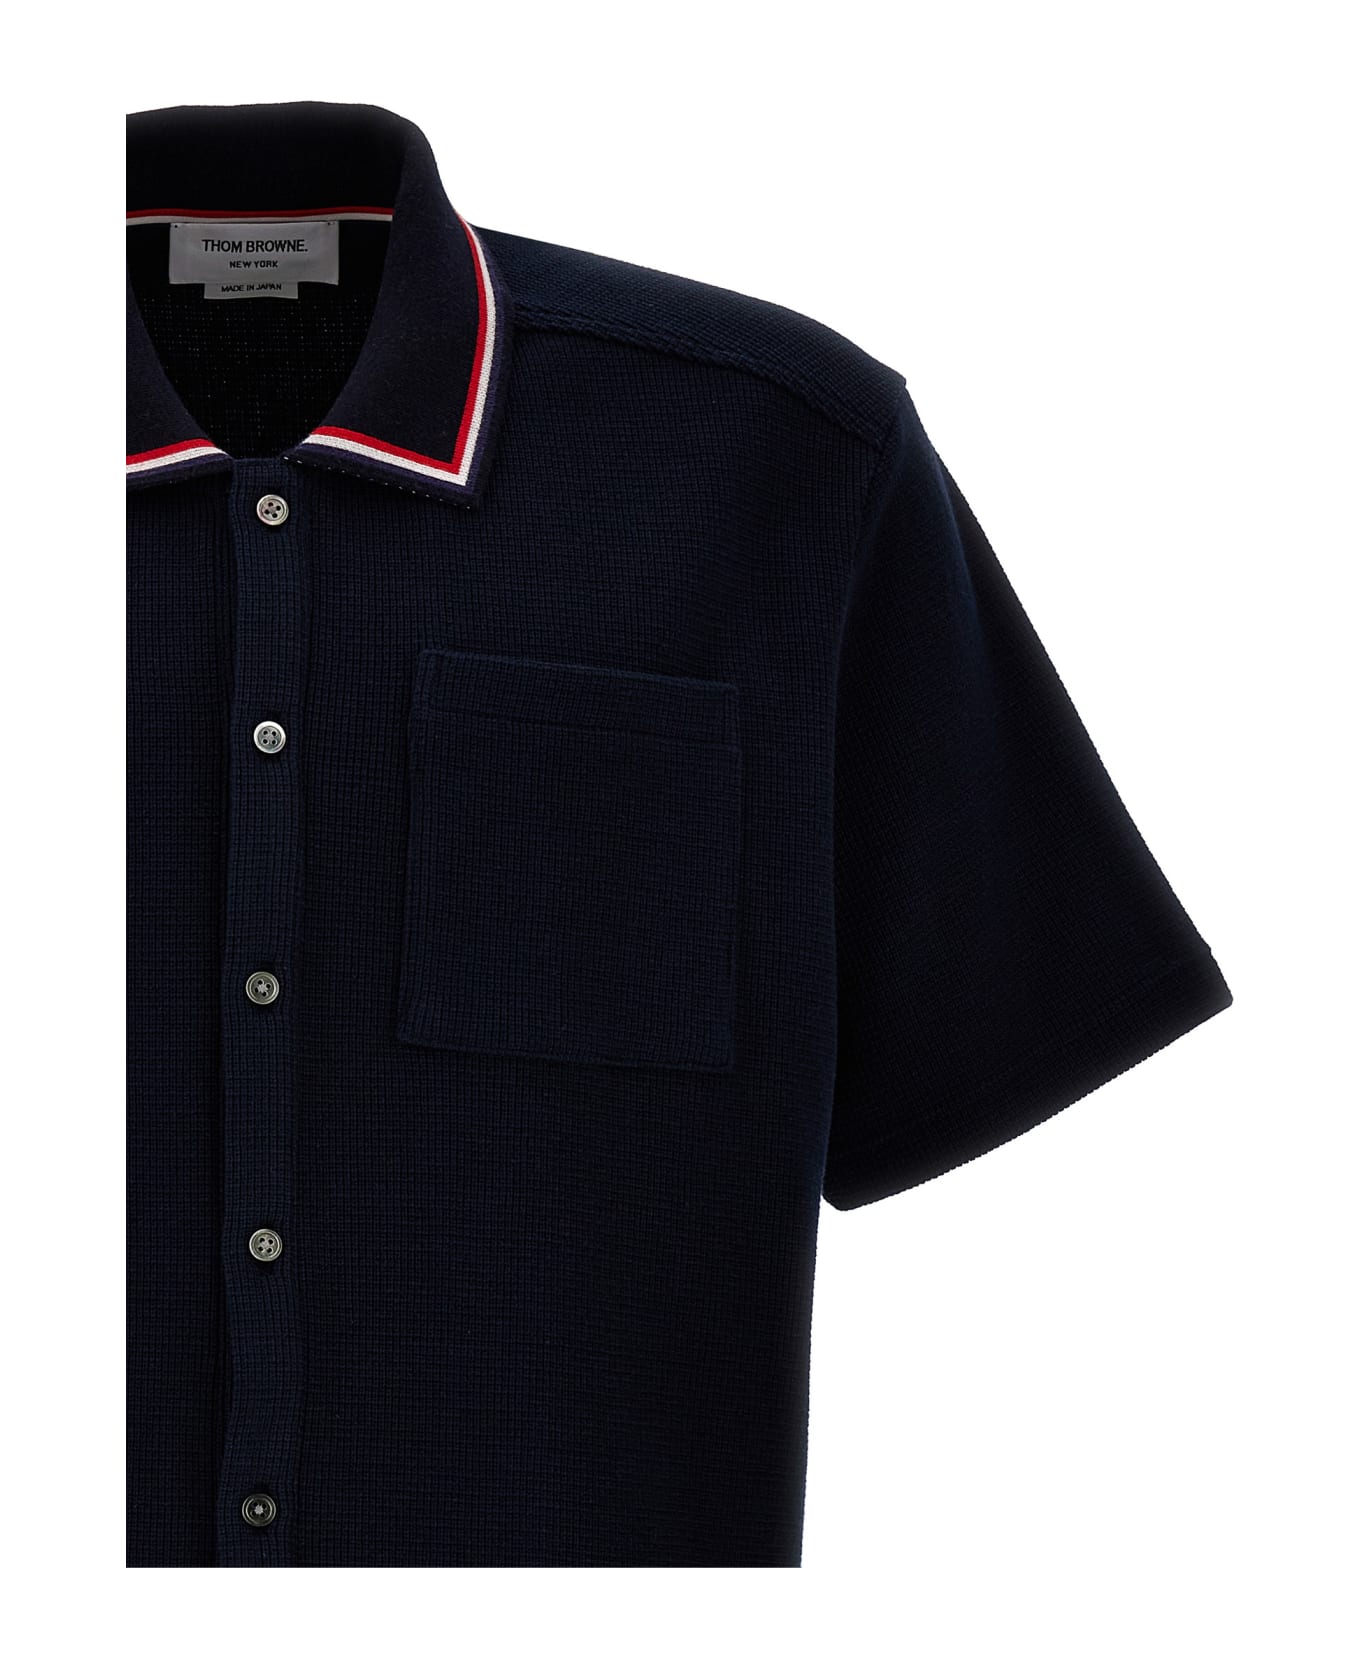 Thom Browne Cotton Knit Shirt - Blue